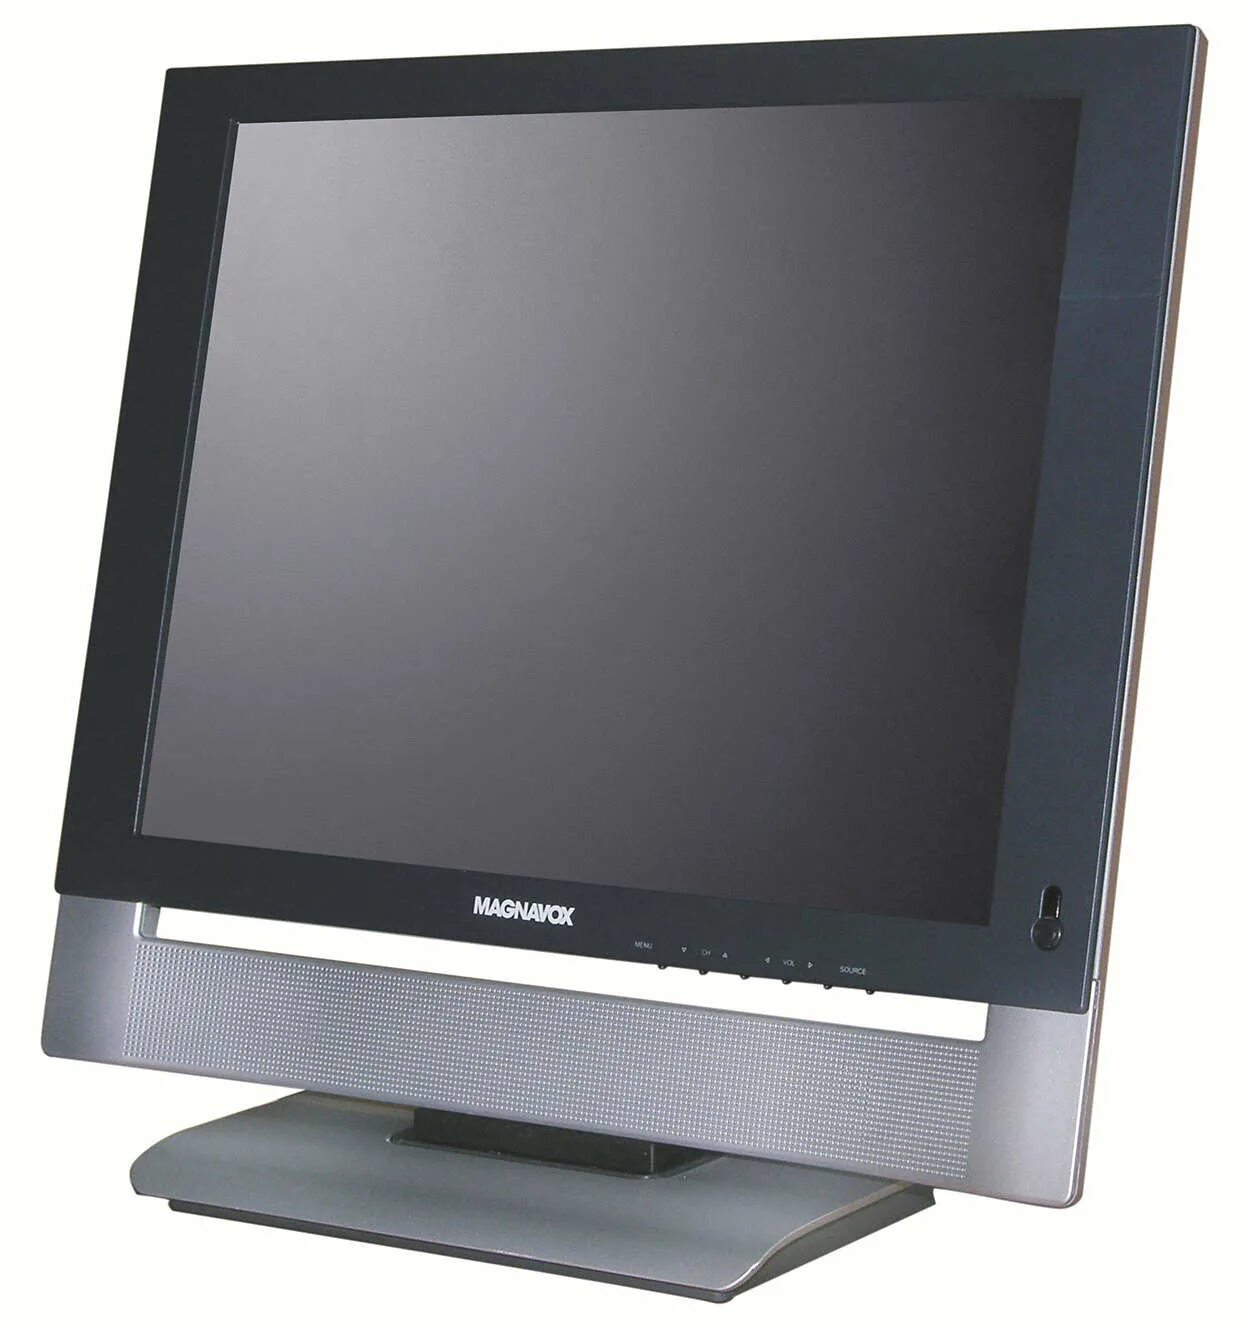 Телевизор 15 минут. Magnavox телевизор. Philips Magnavox. Телевизор Philips Magnavox. LCD TV модель Goose.